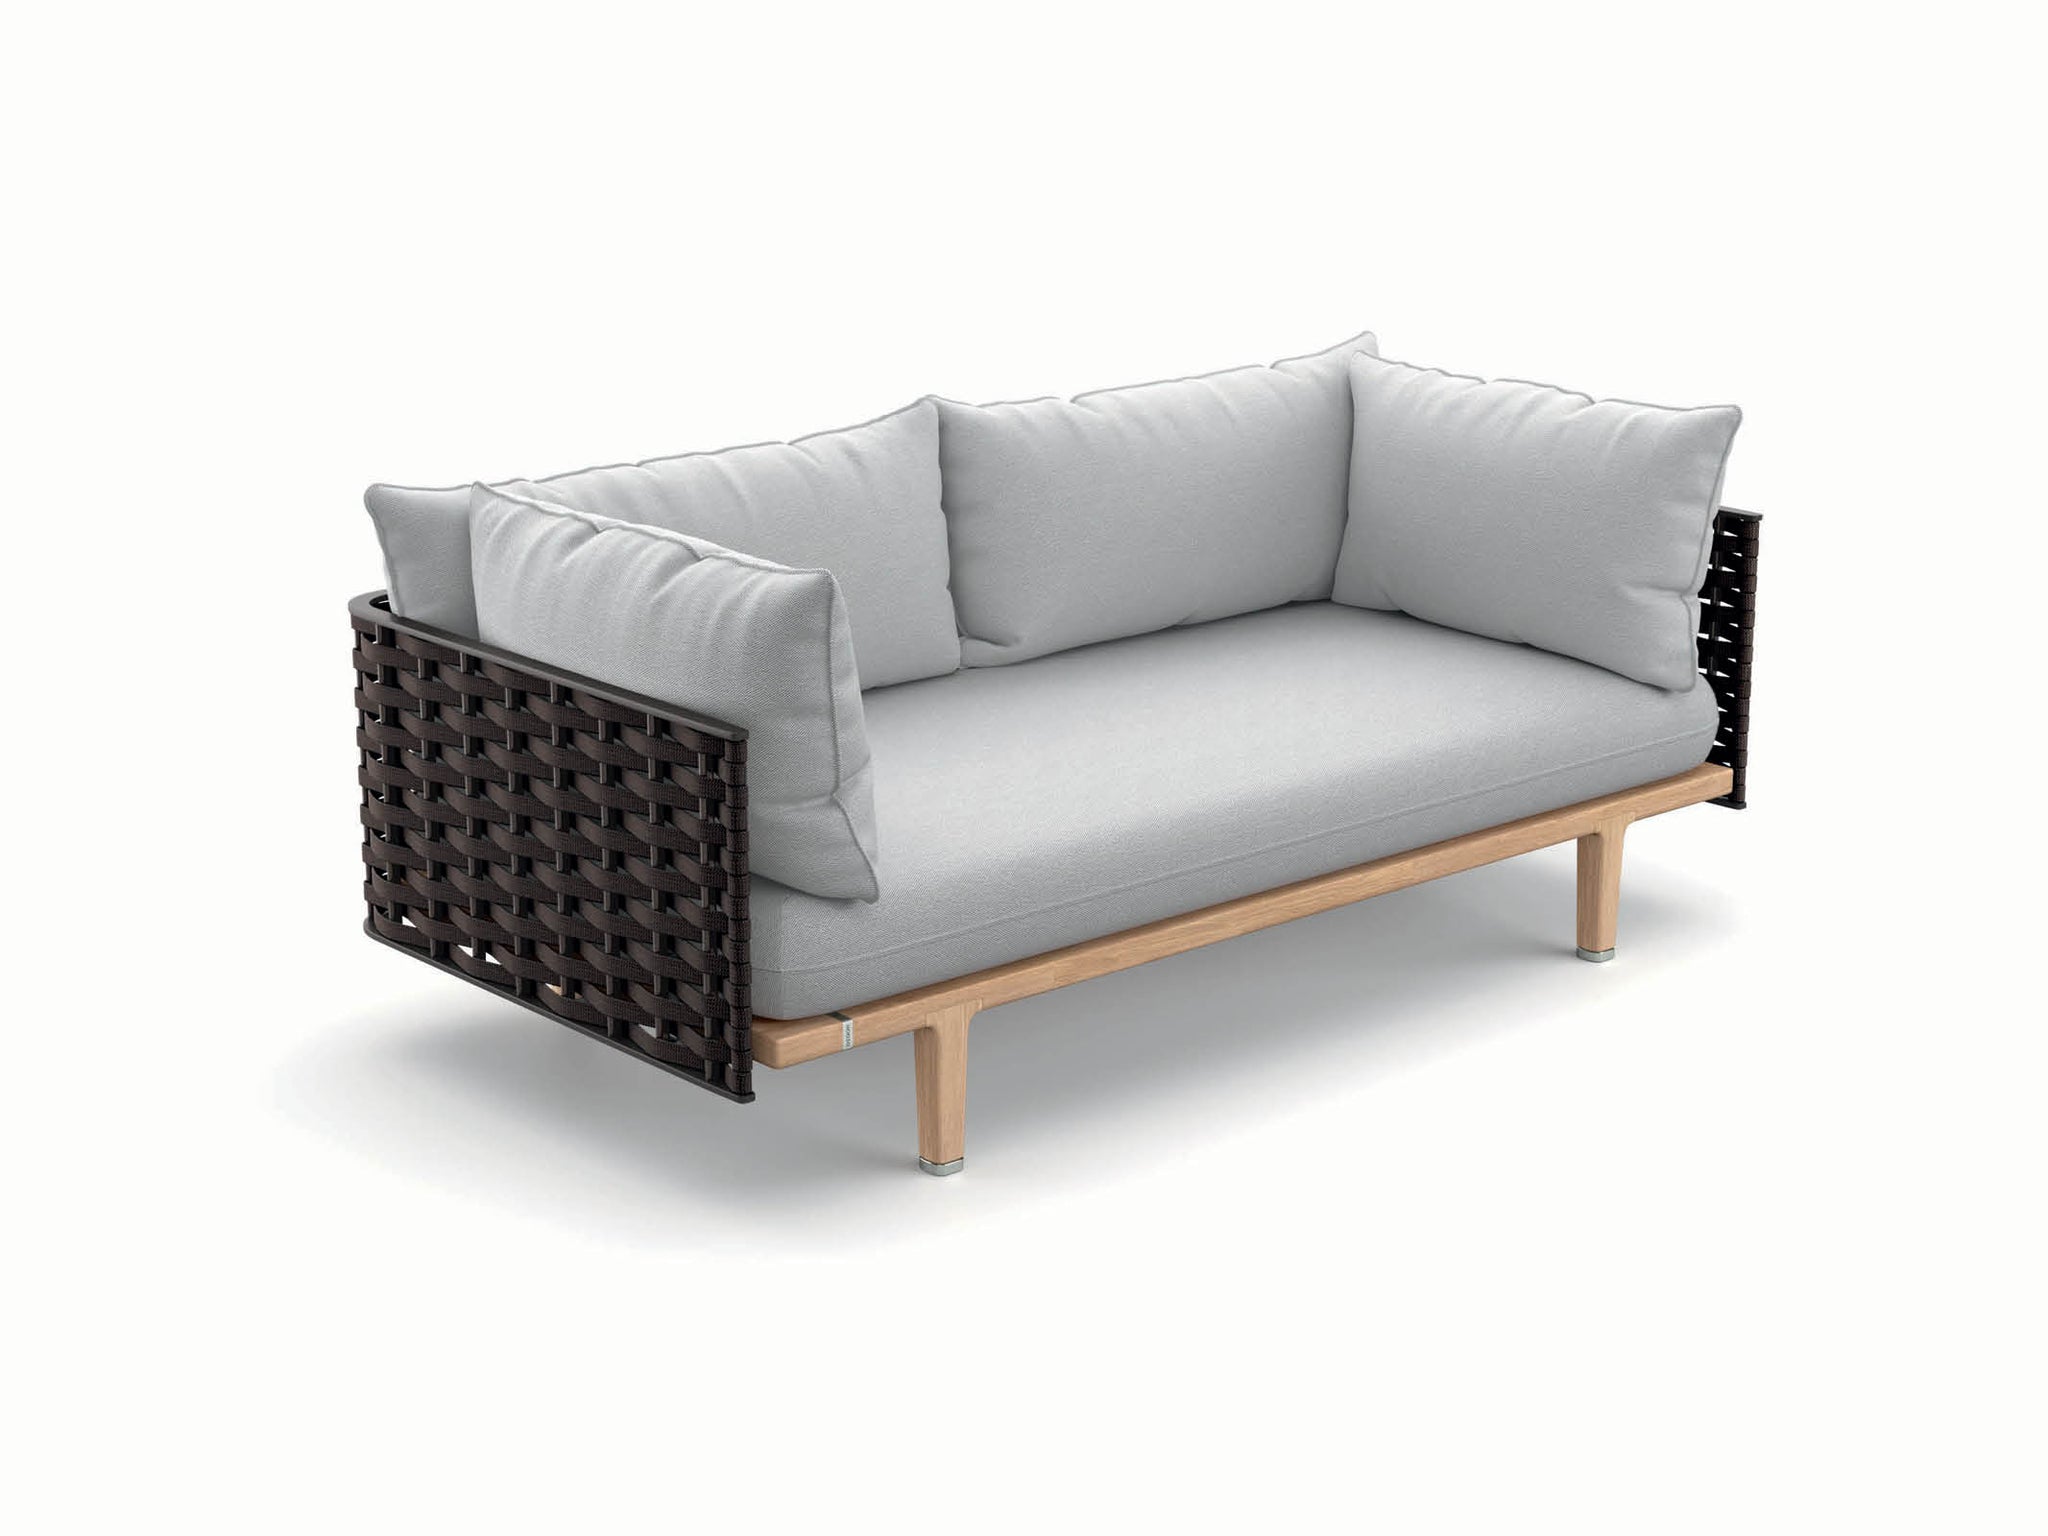 Sealine sofa